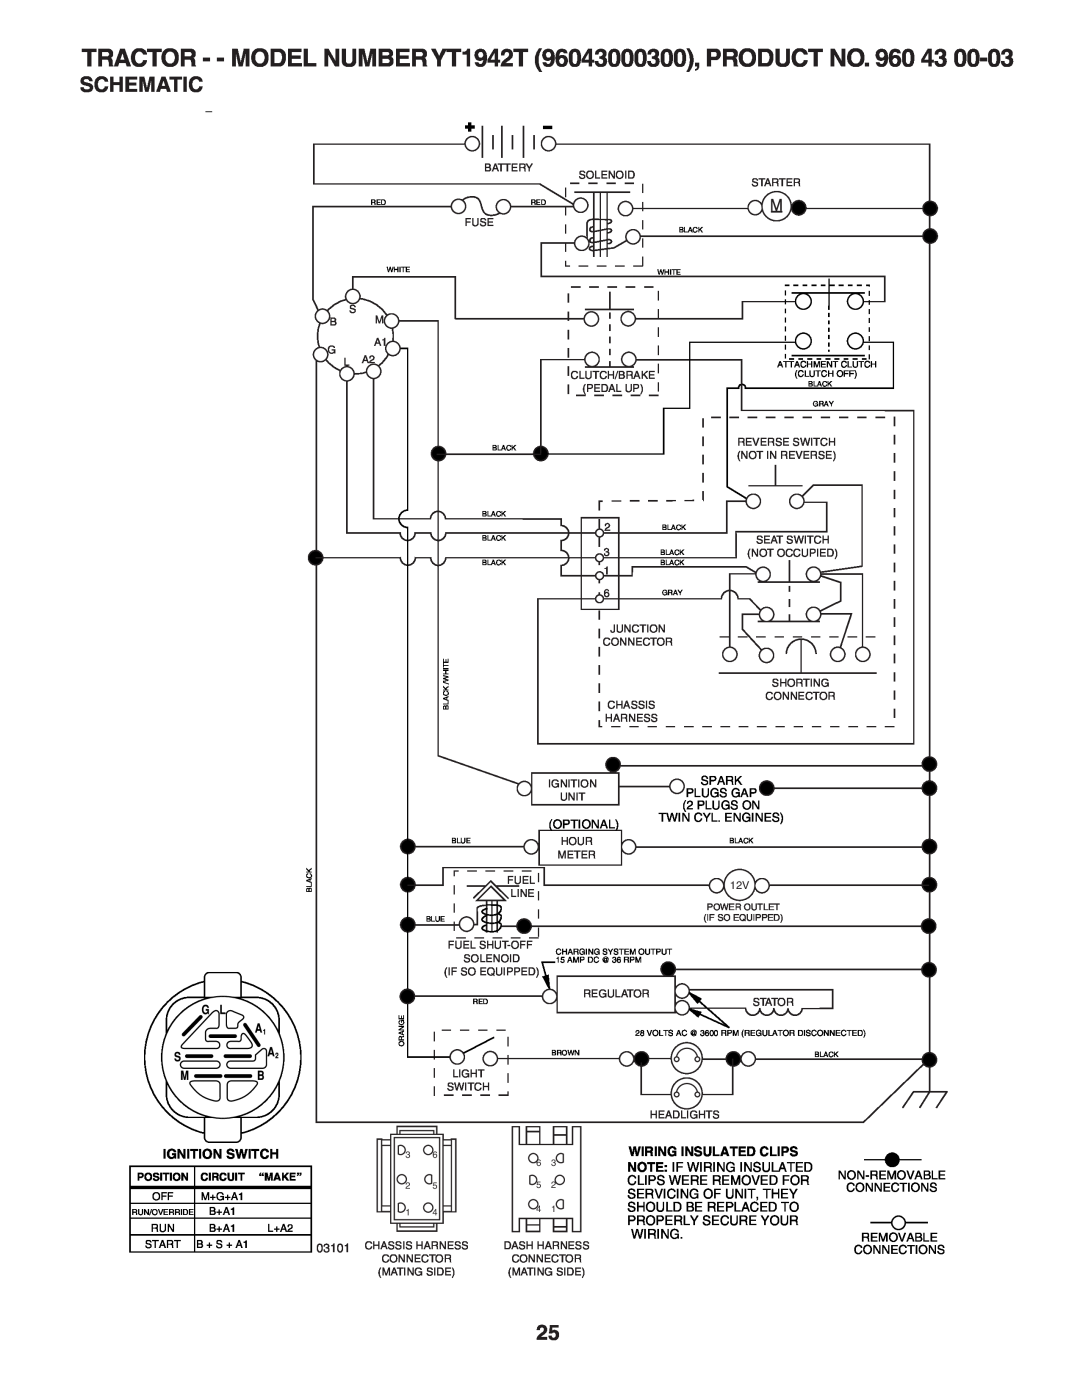 Husqvarna YT1942T Schematic, Ignition Switch, Non-Removable Connections Removable Connections, Position, Circuit, “Make” 